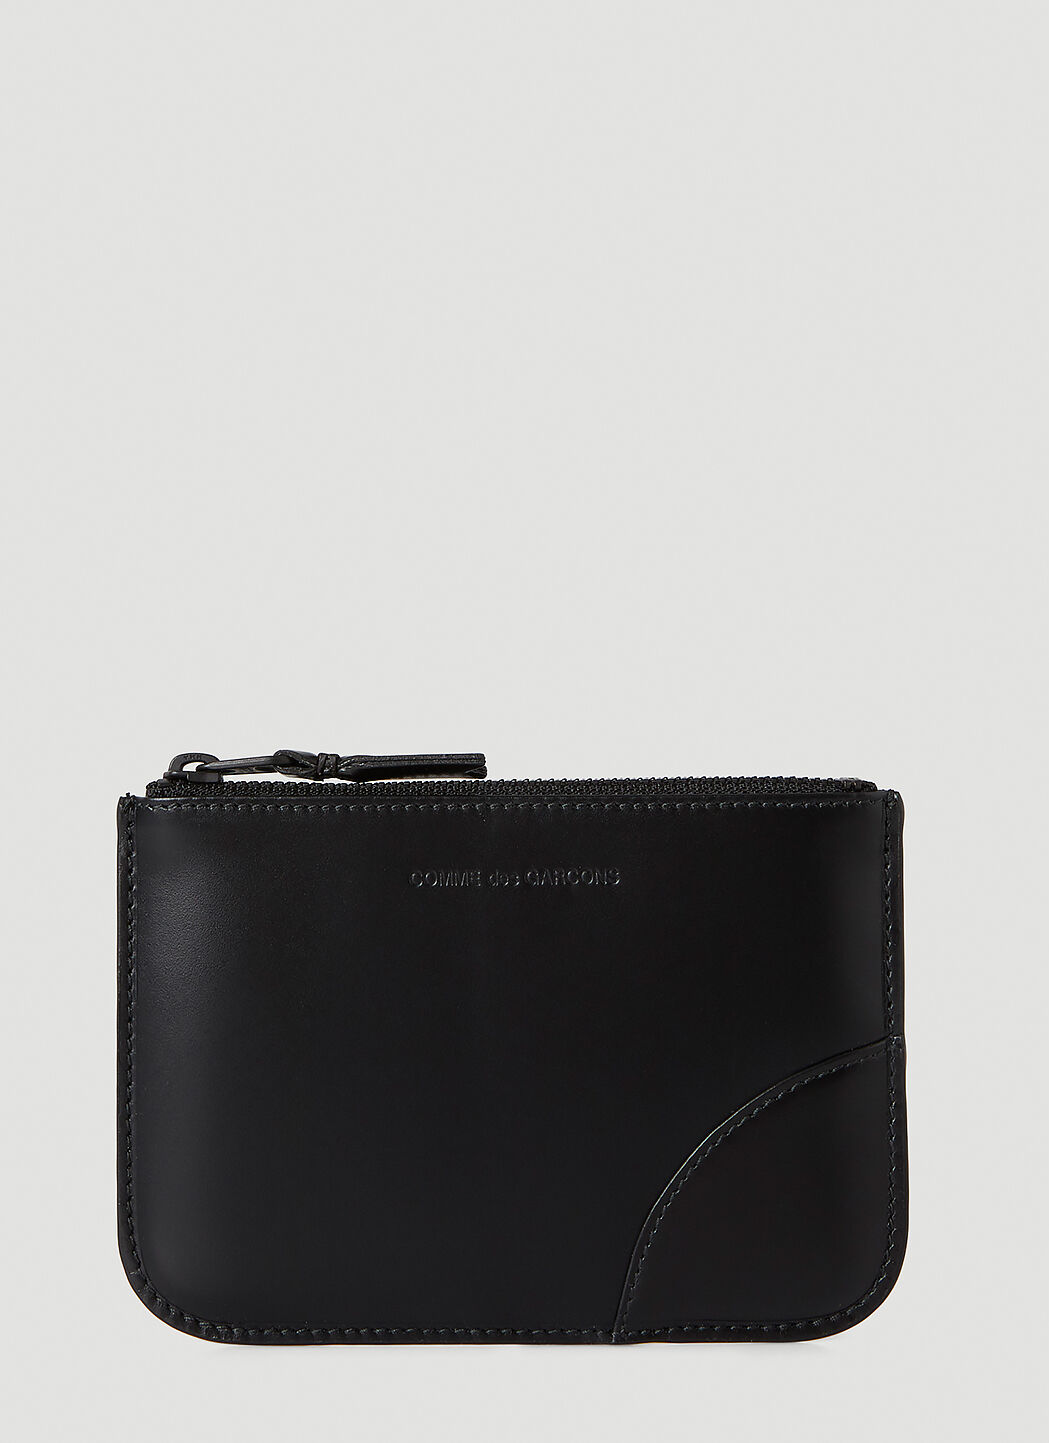 Comme des Garçons Wallet 同色系拉链钱袋 黑色 cdw0356004